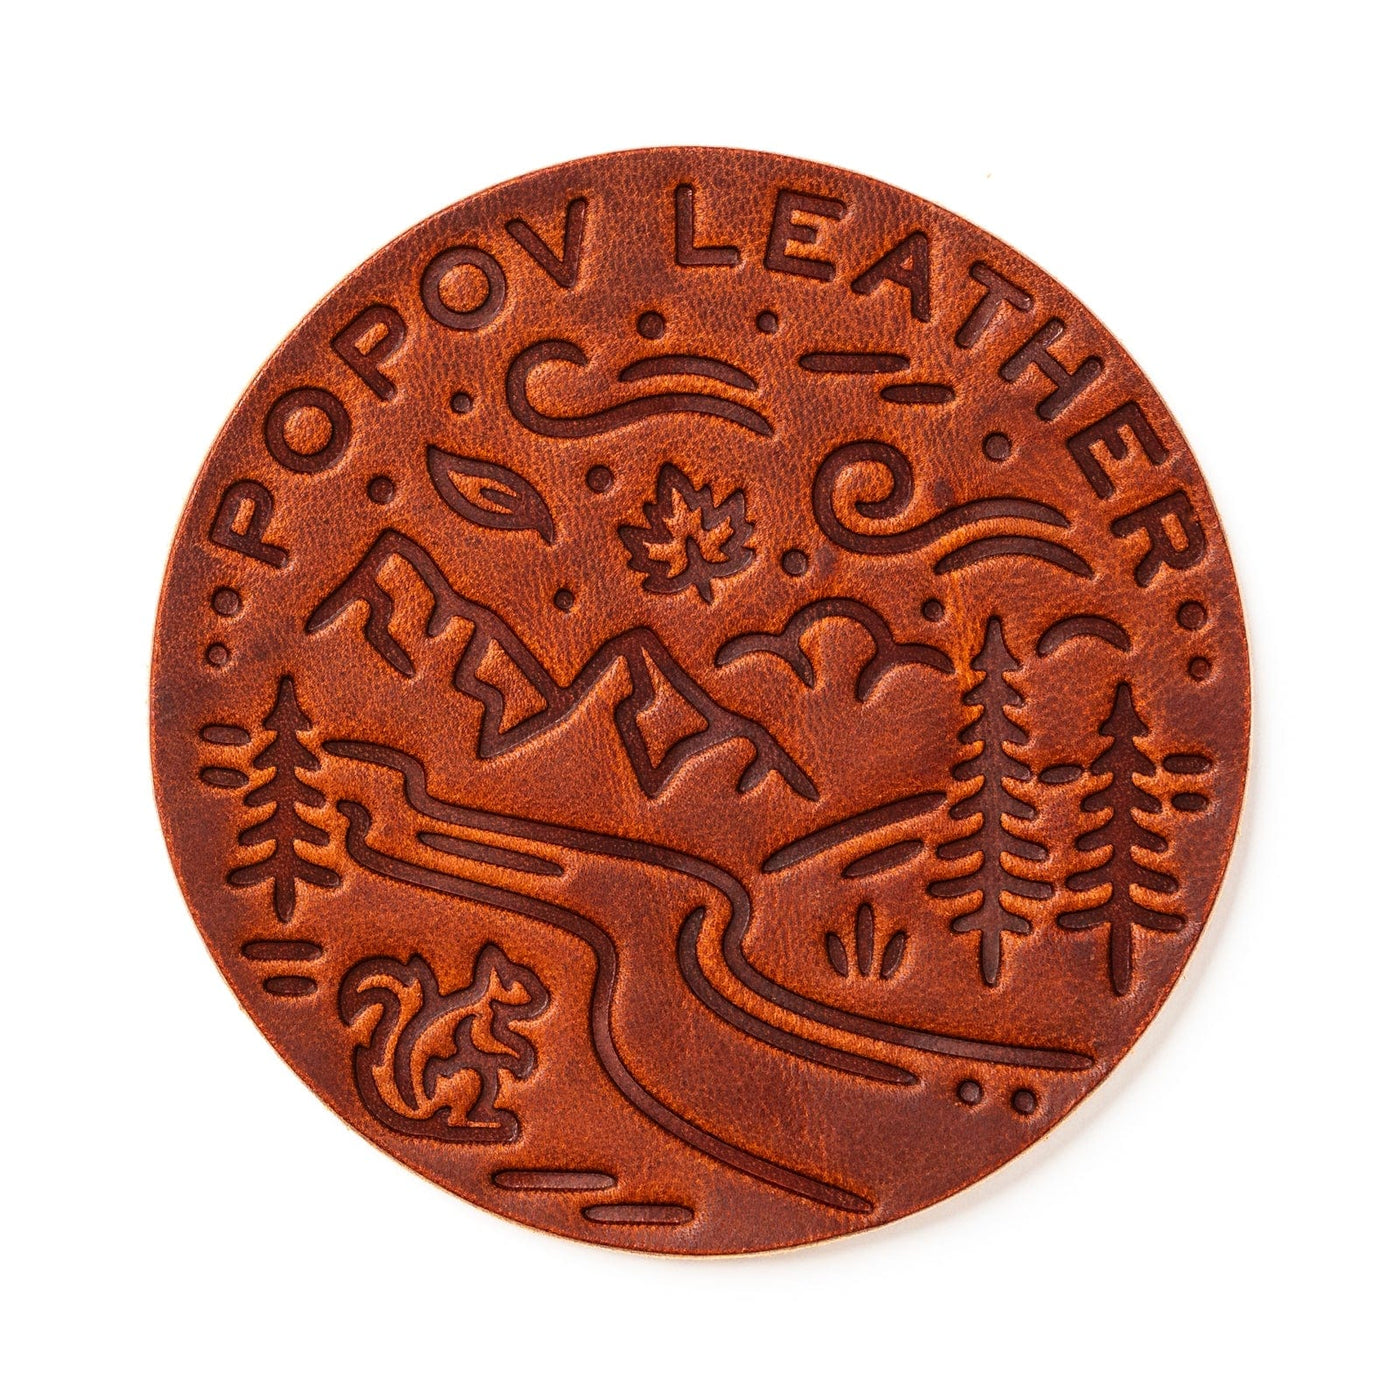 Four Seasons Coasters - English Tan - 4 Pack Popov Leather